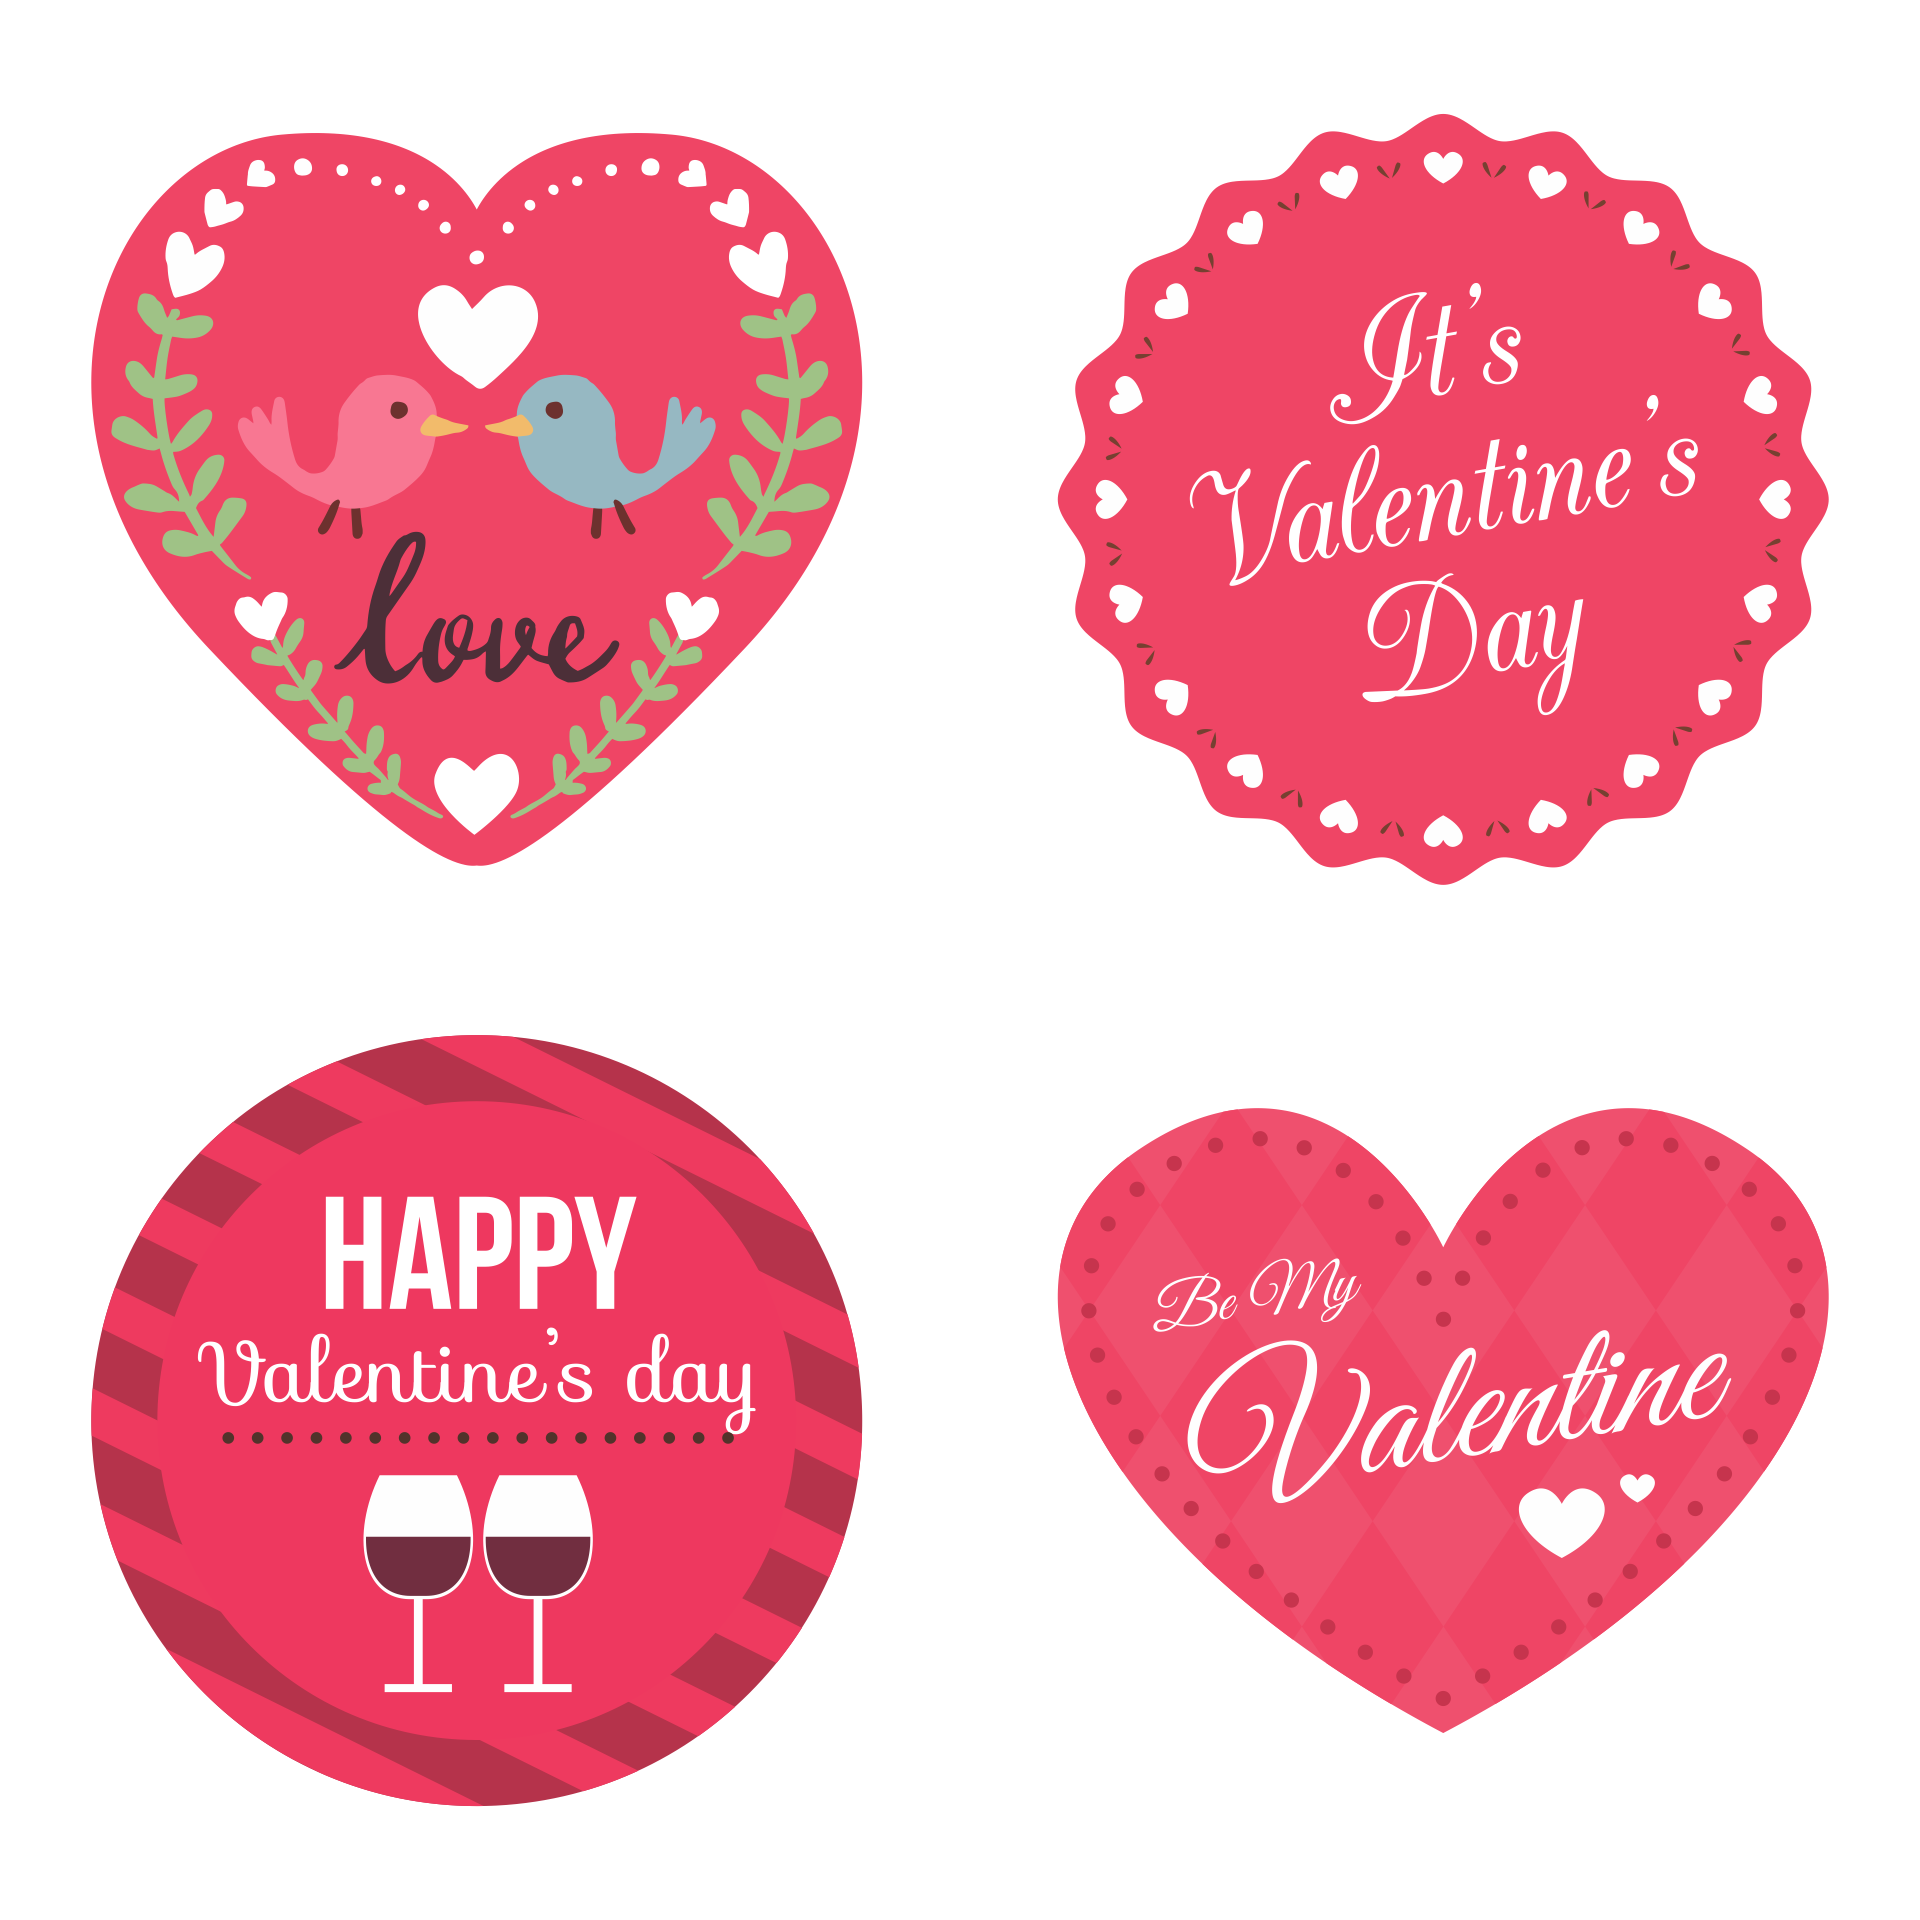 Printable Valentine Labels